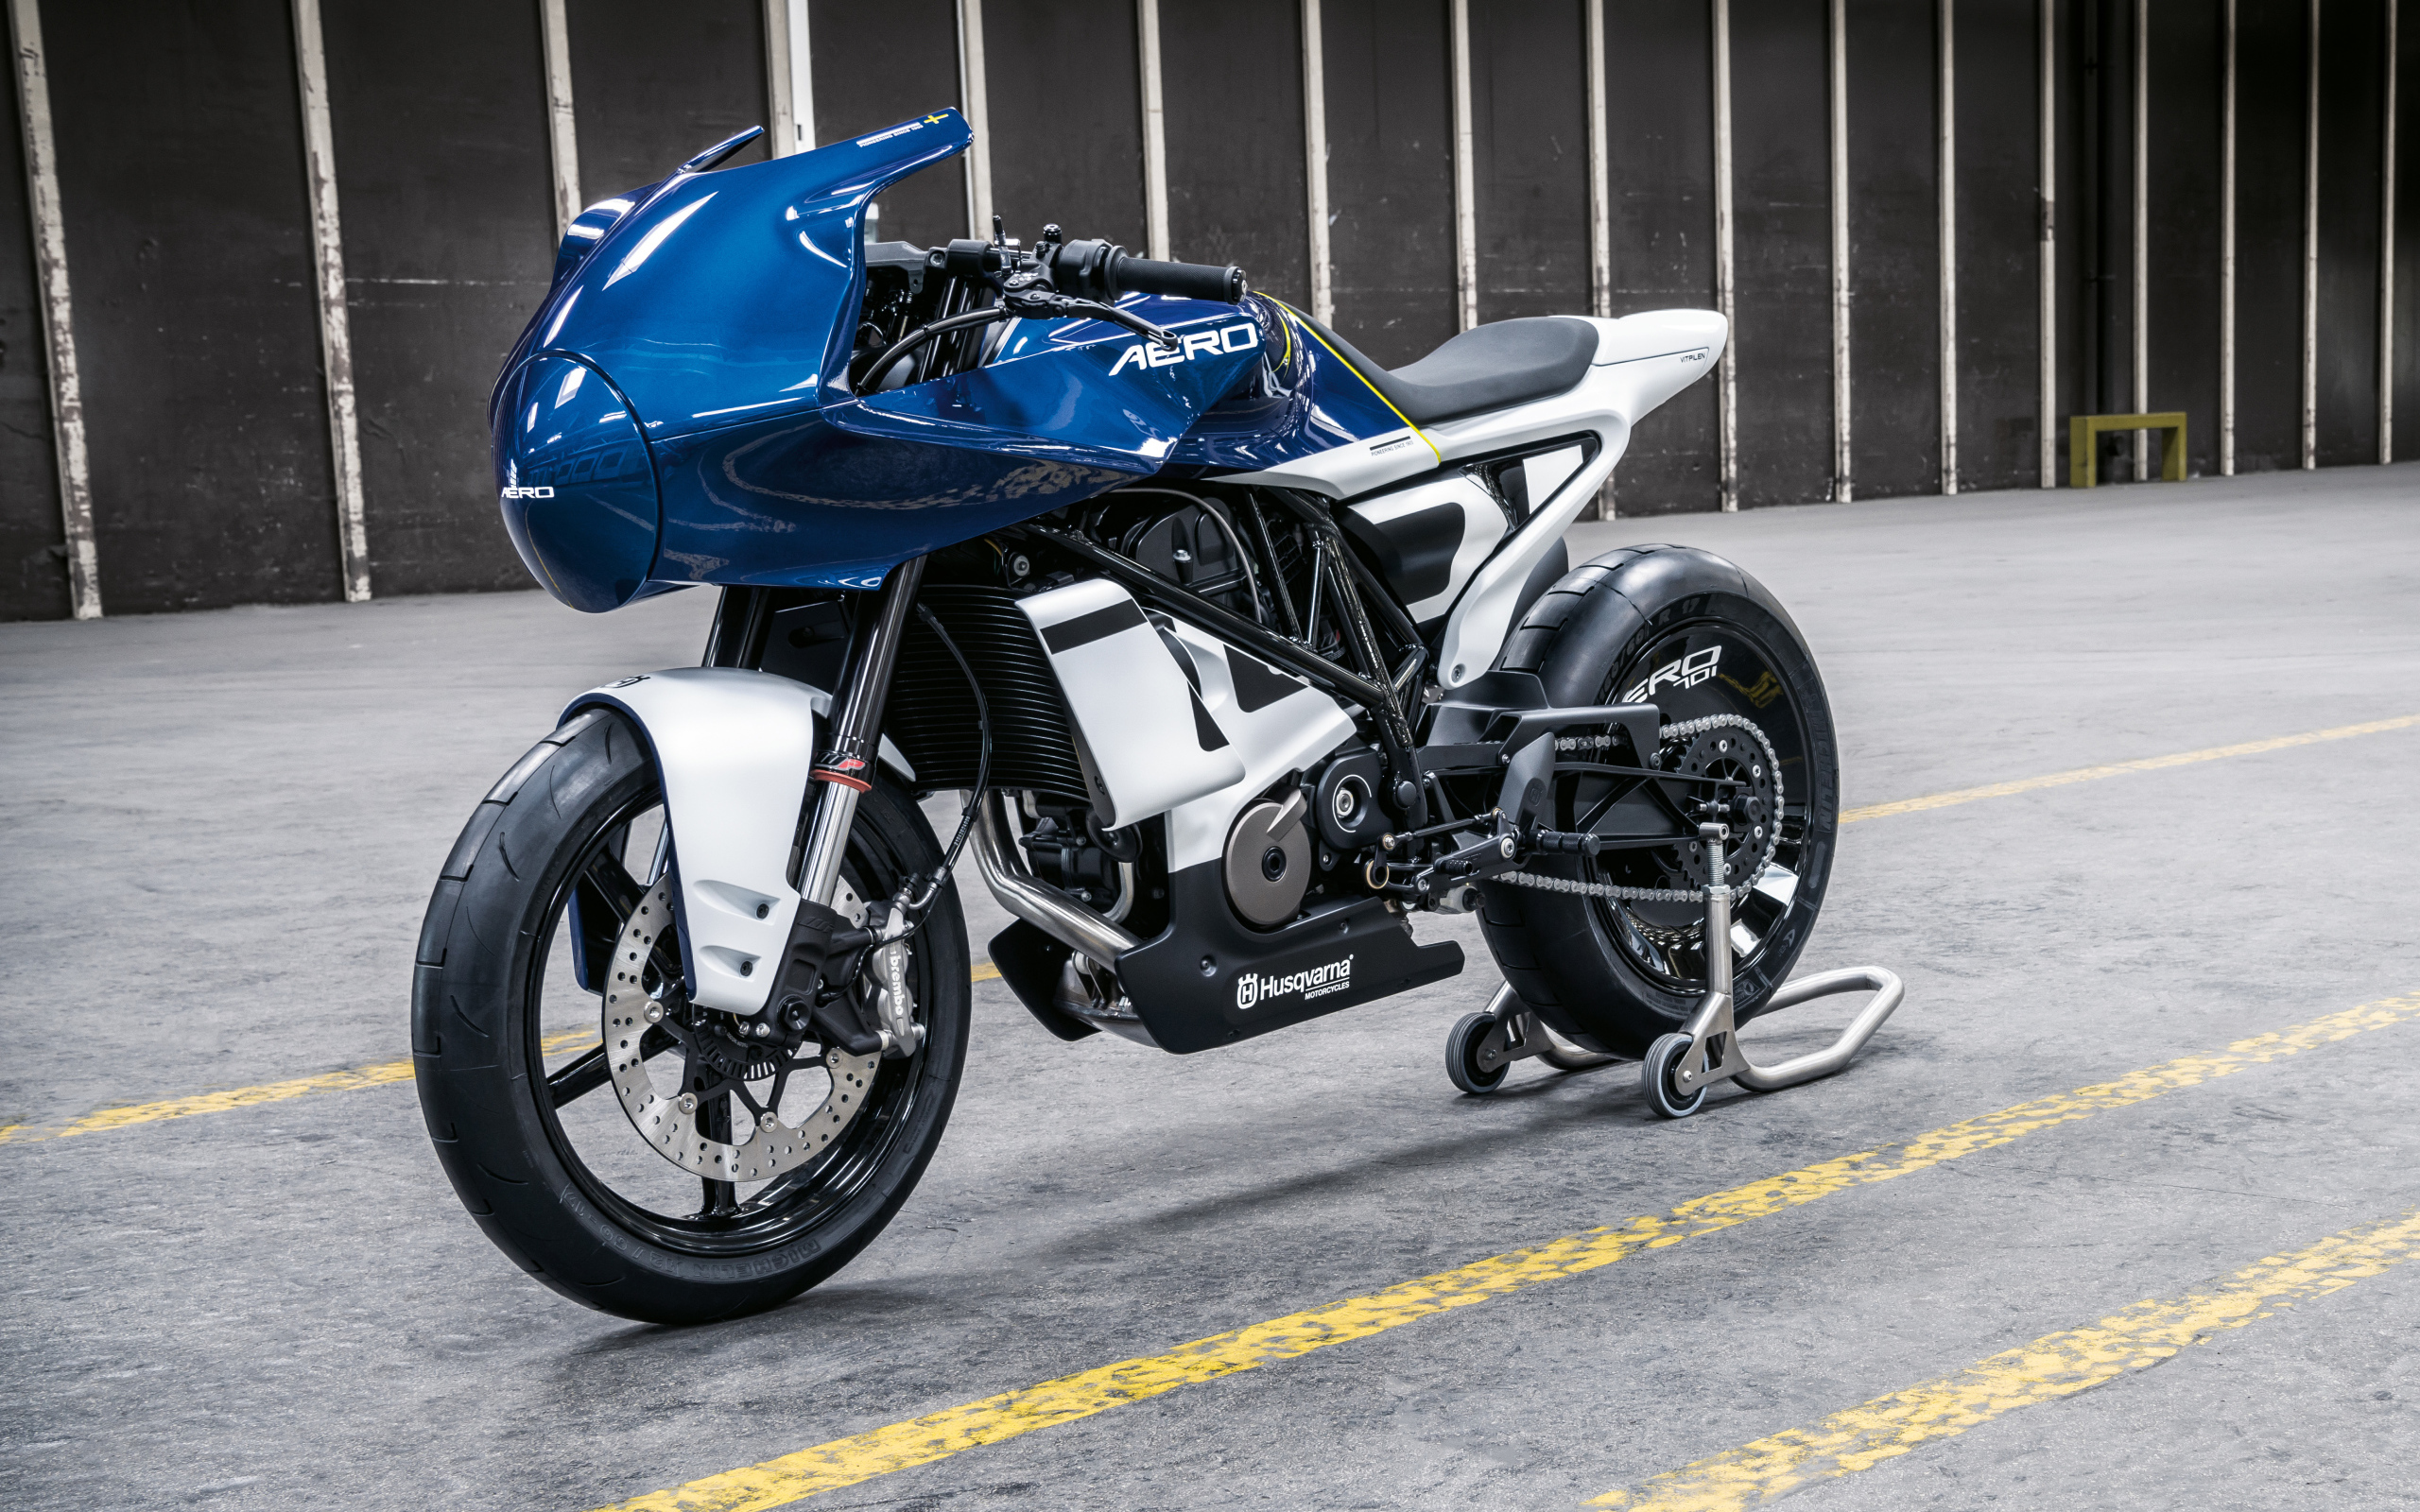 2019 Husqvarna Vitpilen 701 Aero Concept motorcycle on the road